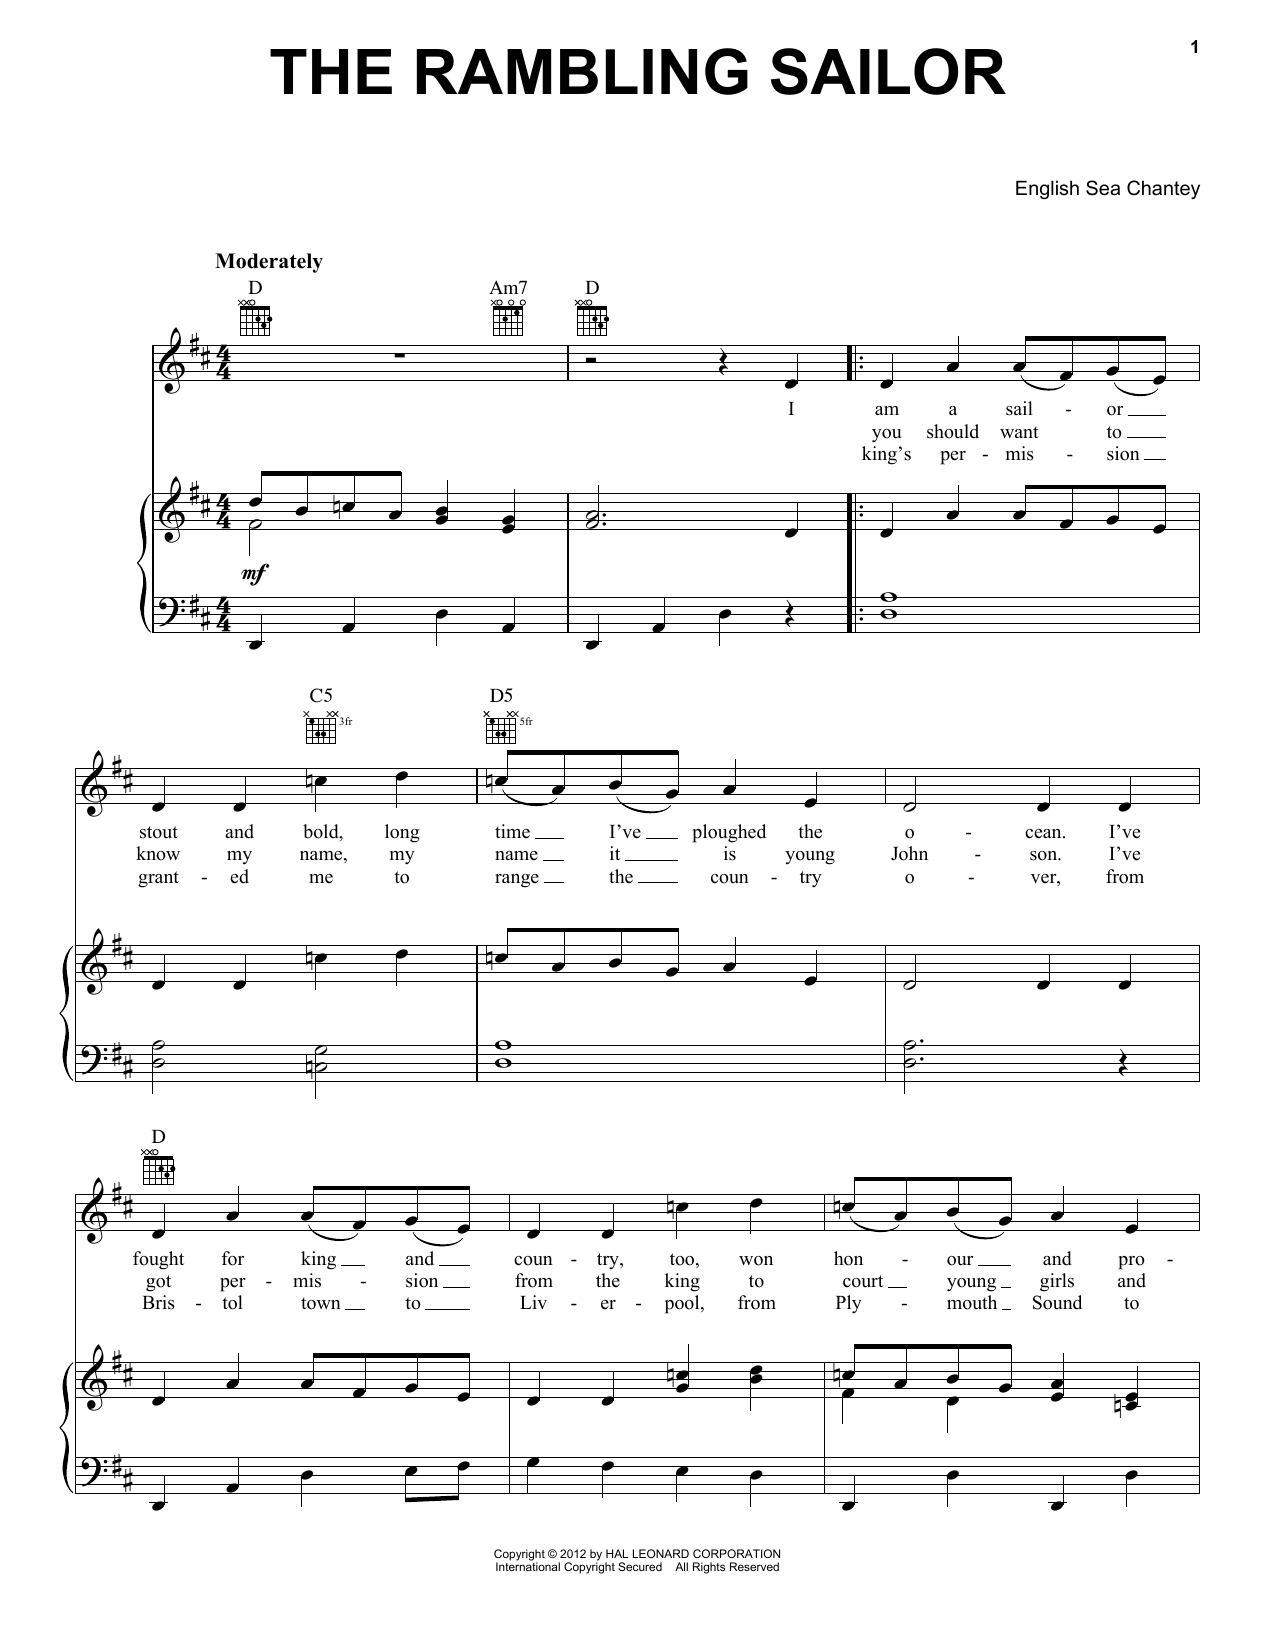 English Sea Chantey The Rambling Sailor Sheet Music Notes & Chords for Melody Line, Lyrics & Chords - Download or Print PDF